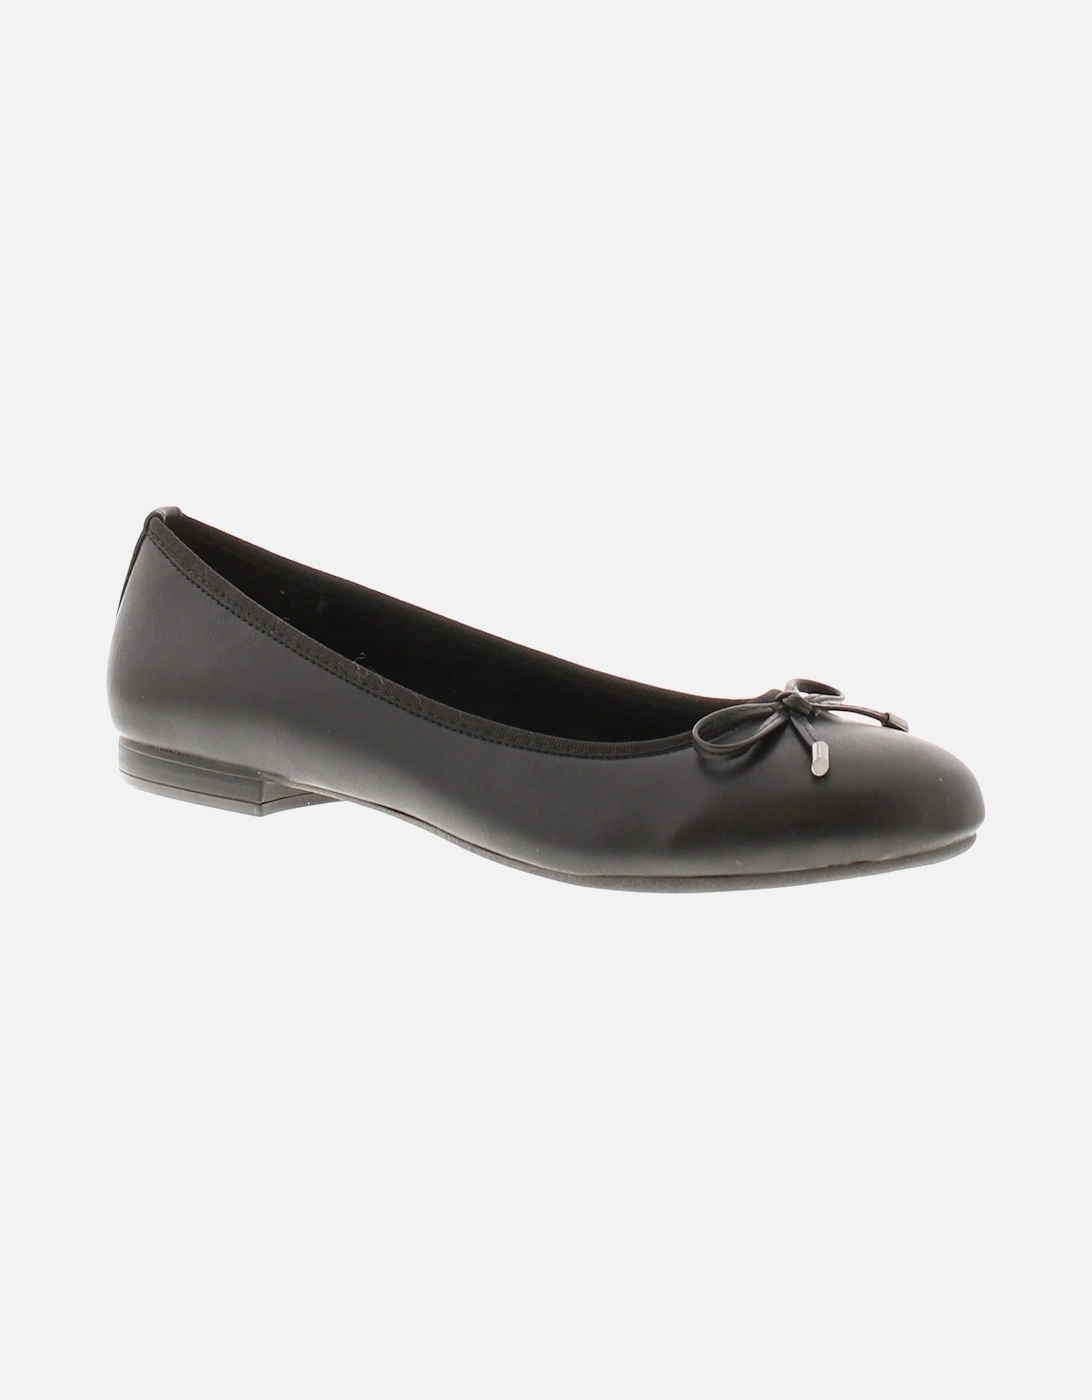 Womens Shoes Flats Ballerina Milana Slip On black UK Size, 6 of 5